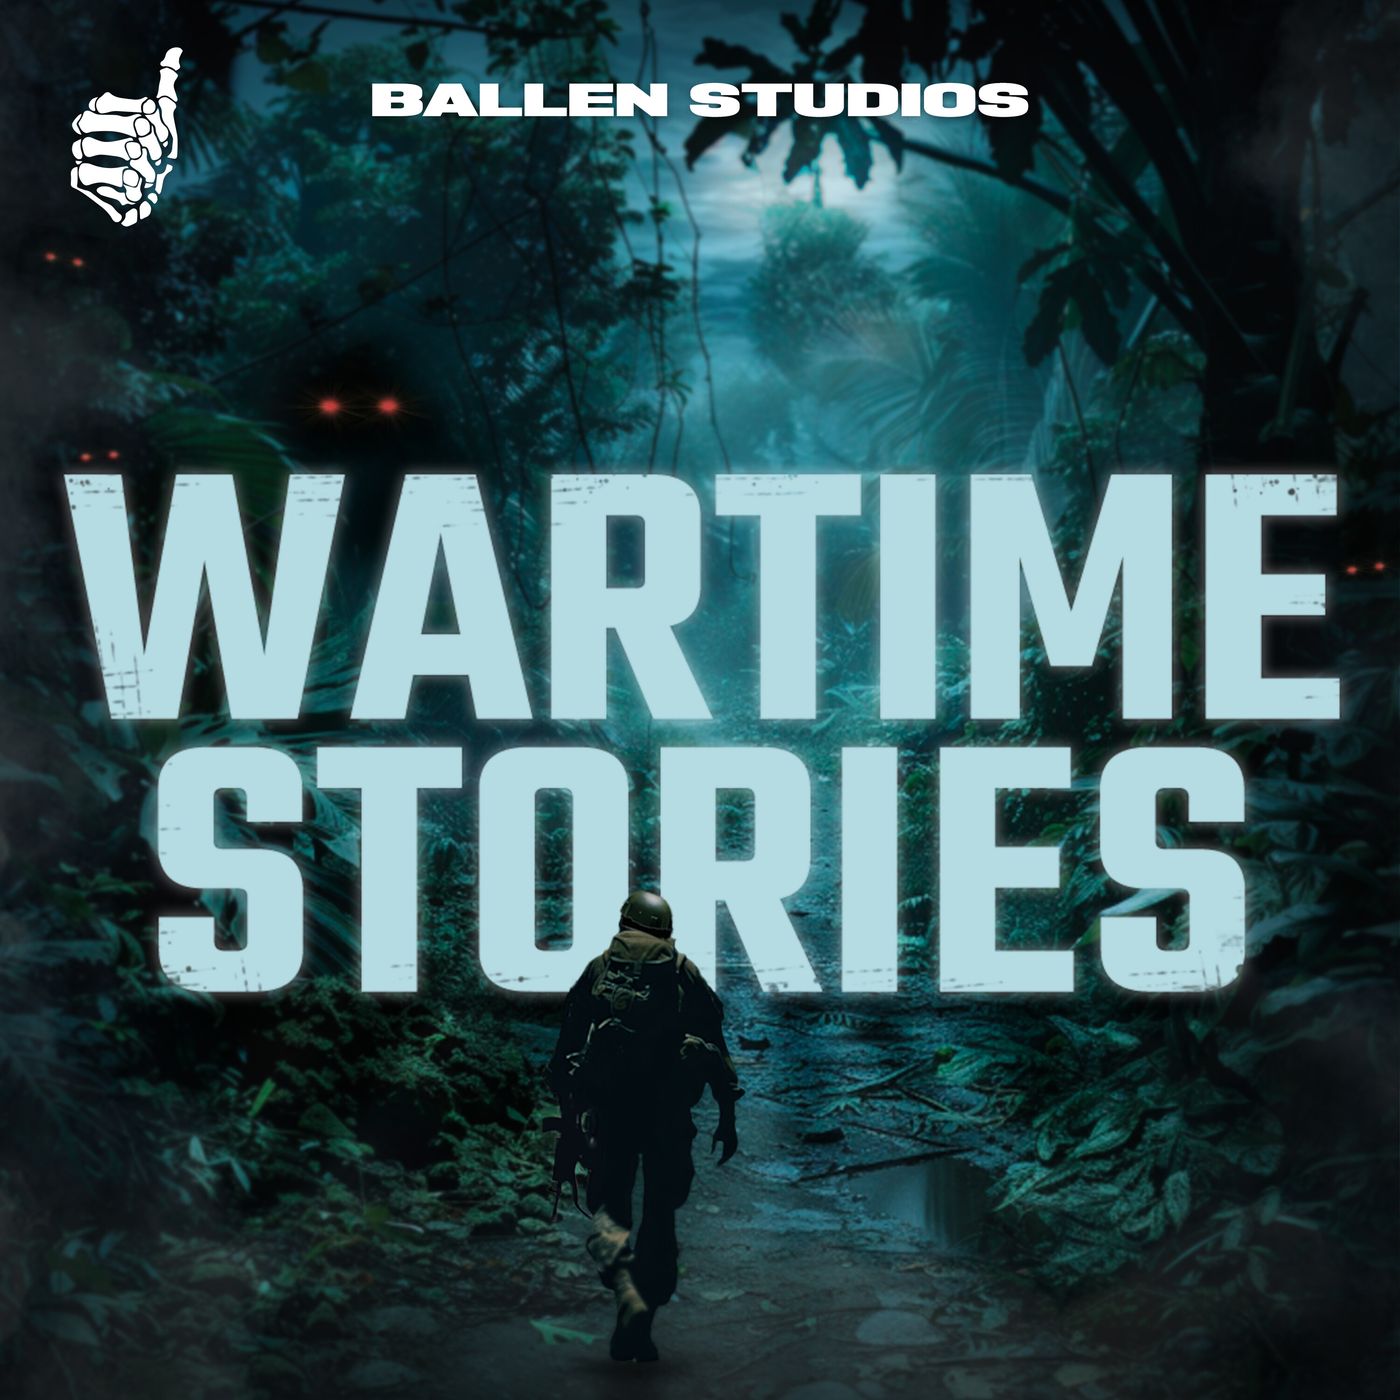 MrBallen Introduces: Wartime Stories